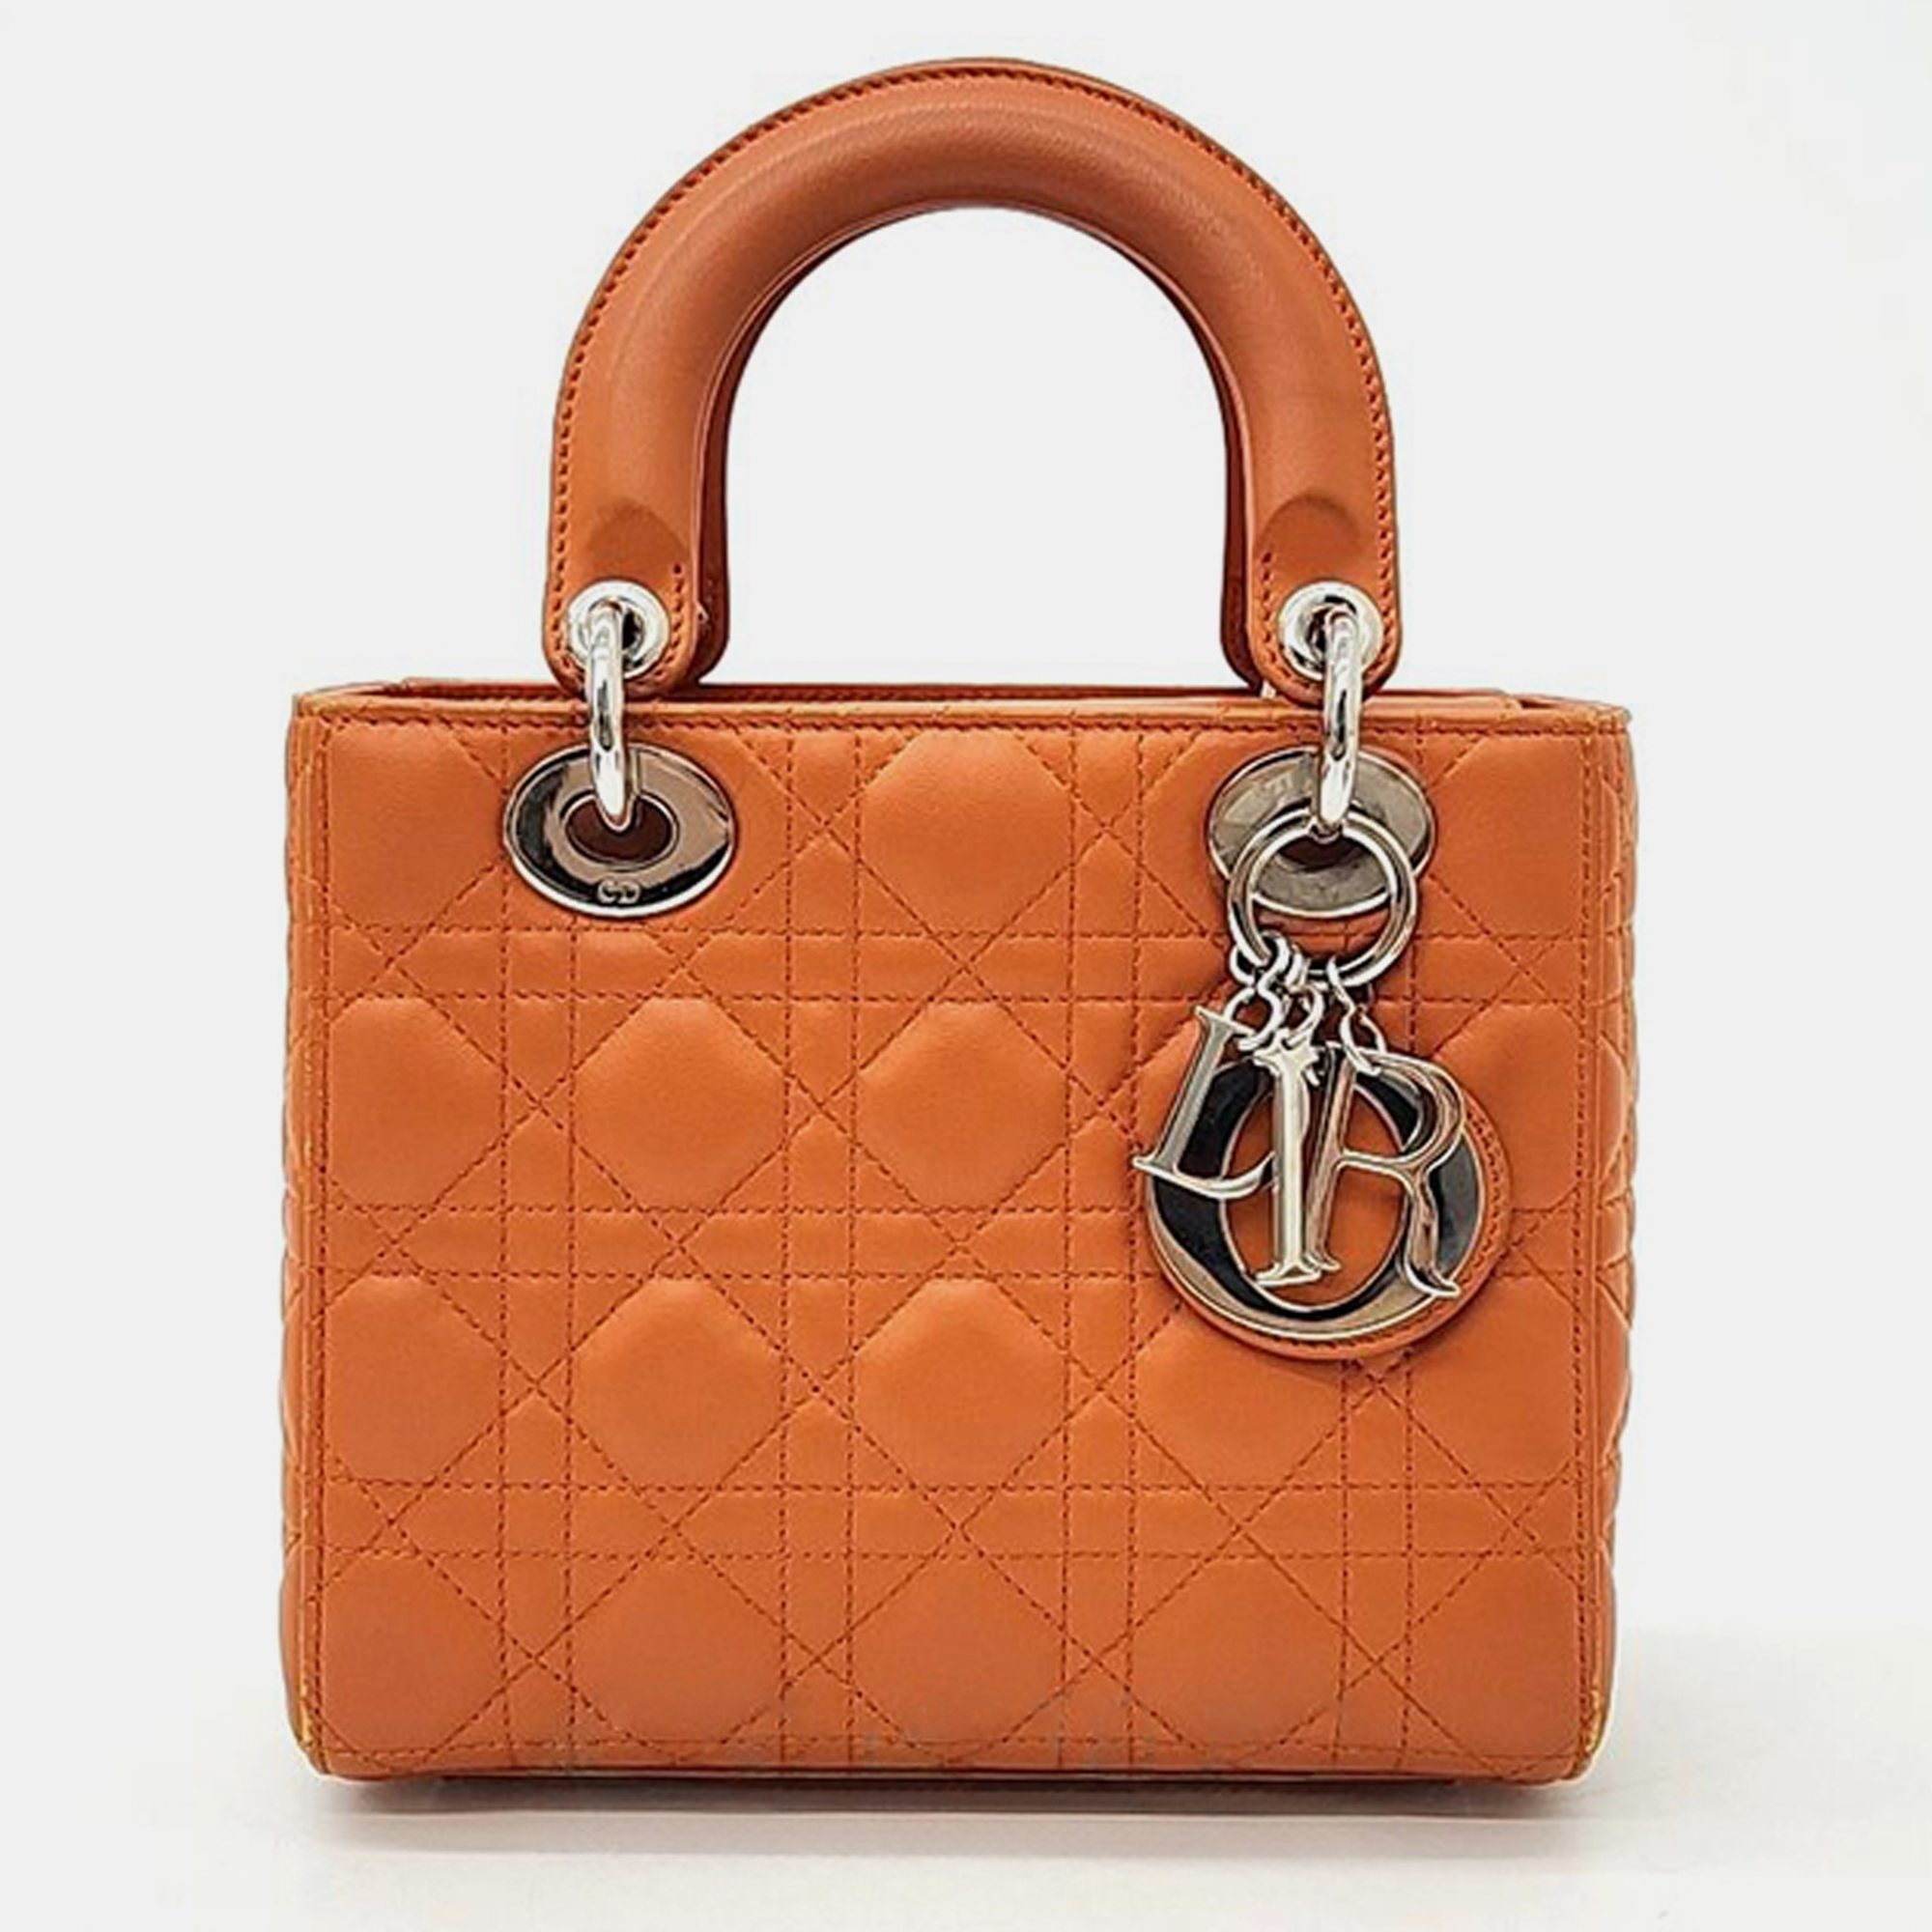 Christian dior orange leather cannage small lady dior bag